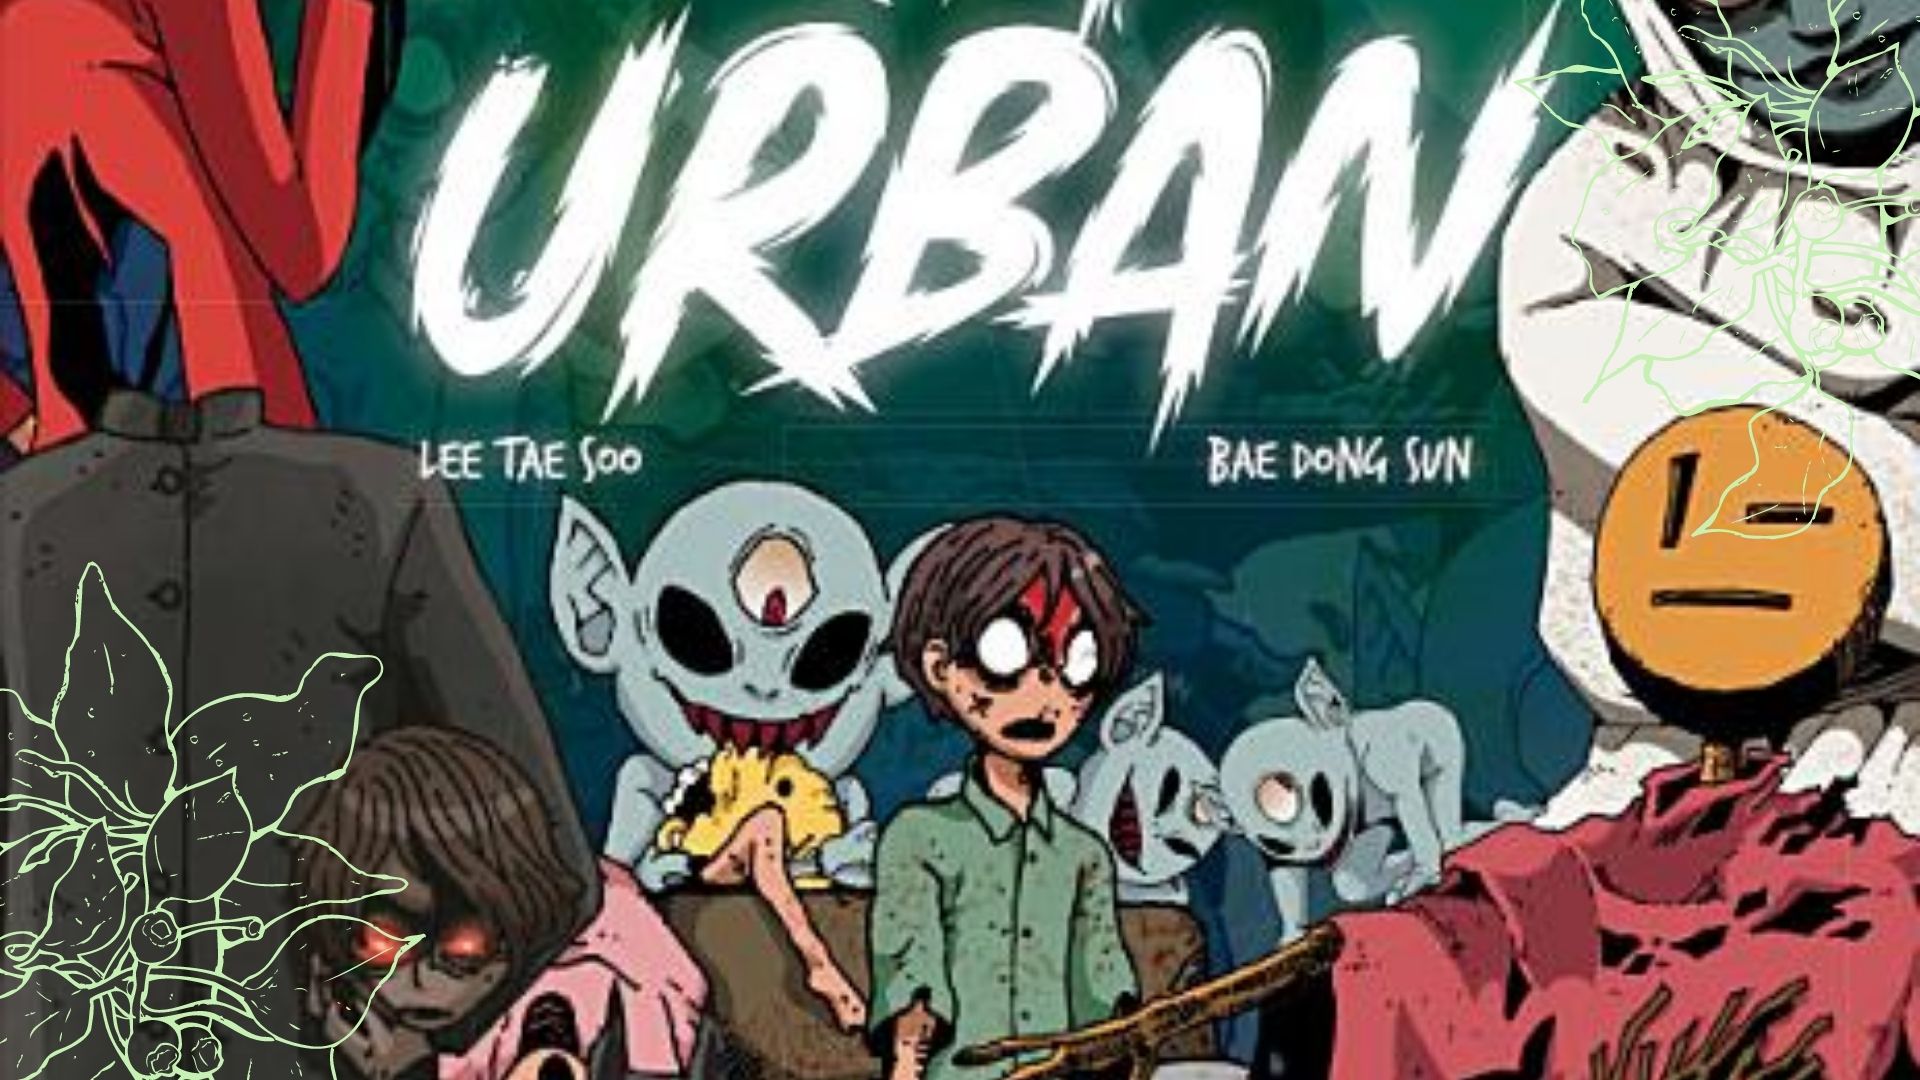 Baca Komik Horor Nusantara: Setan Urban